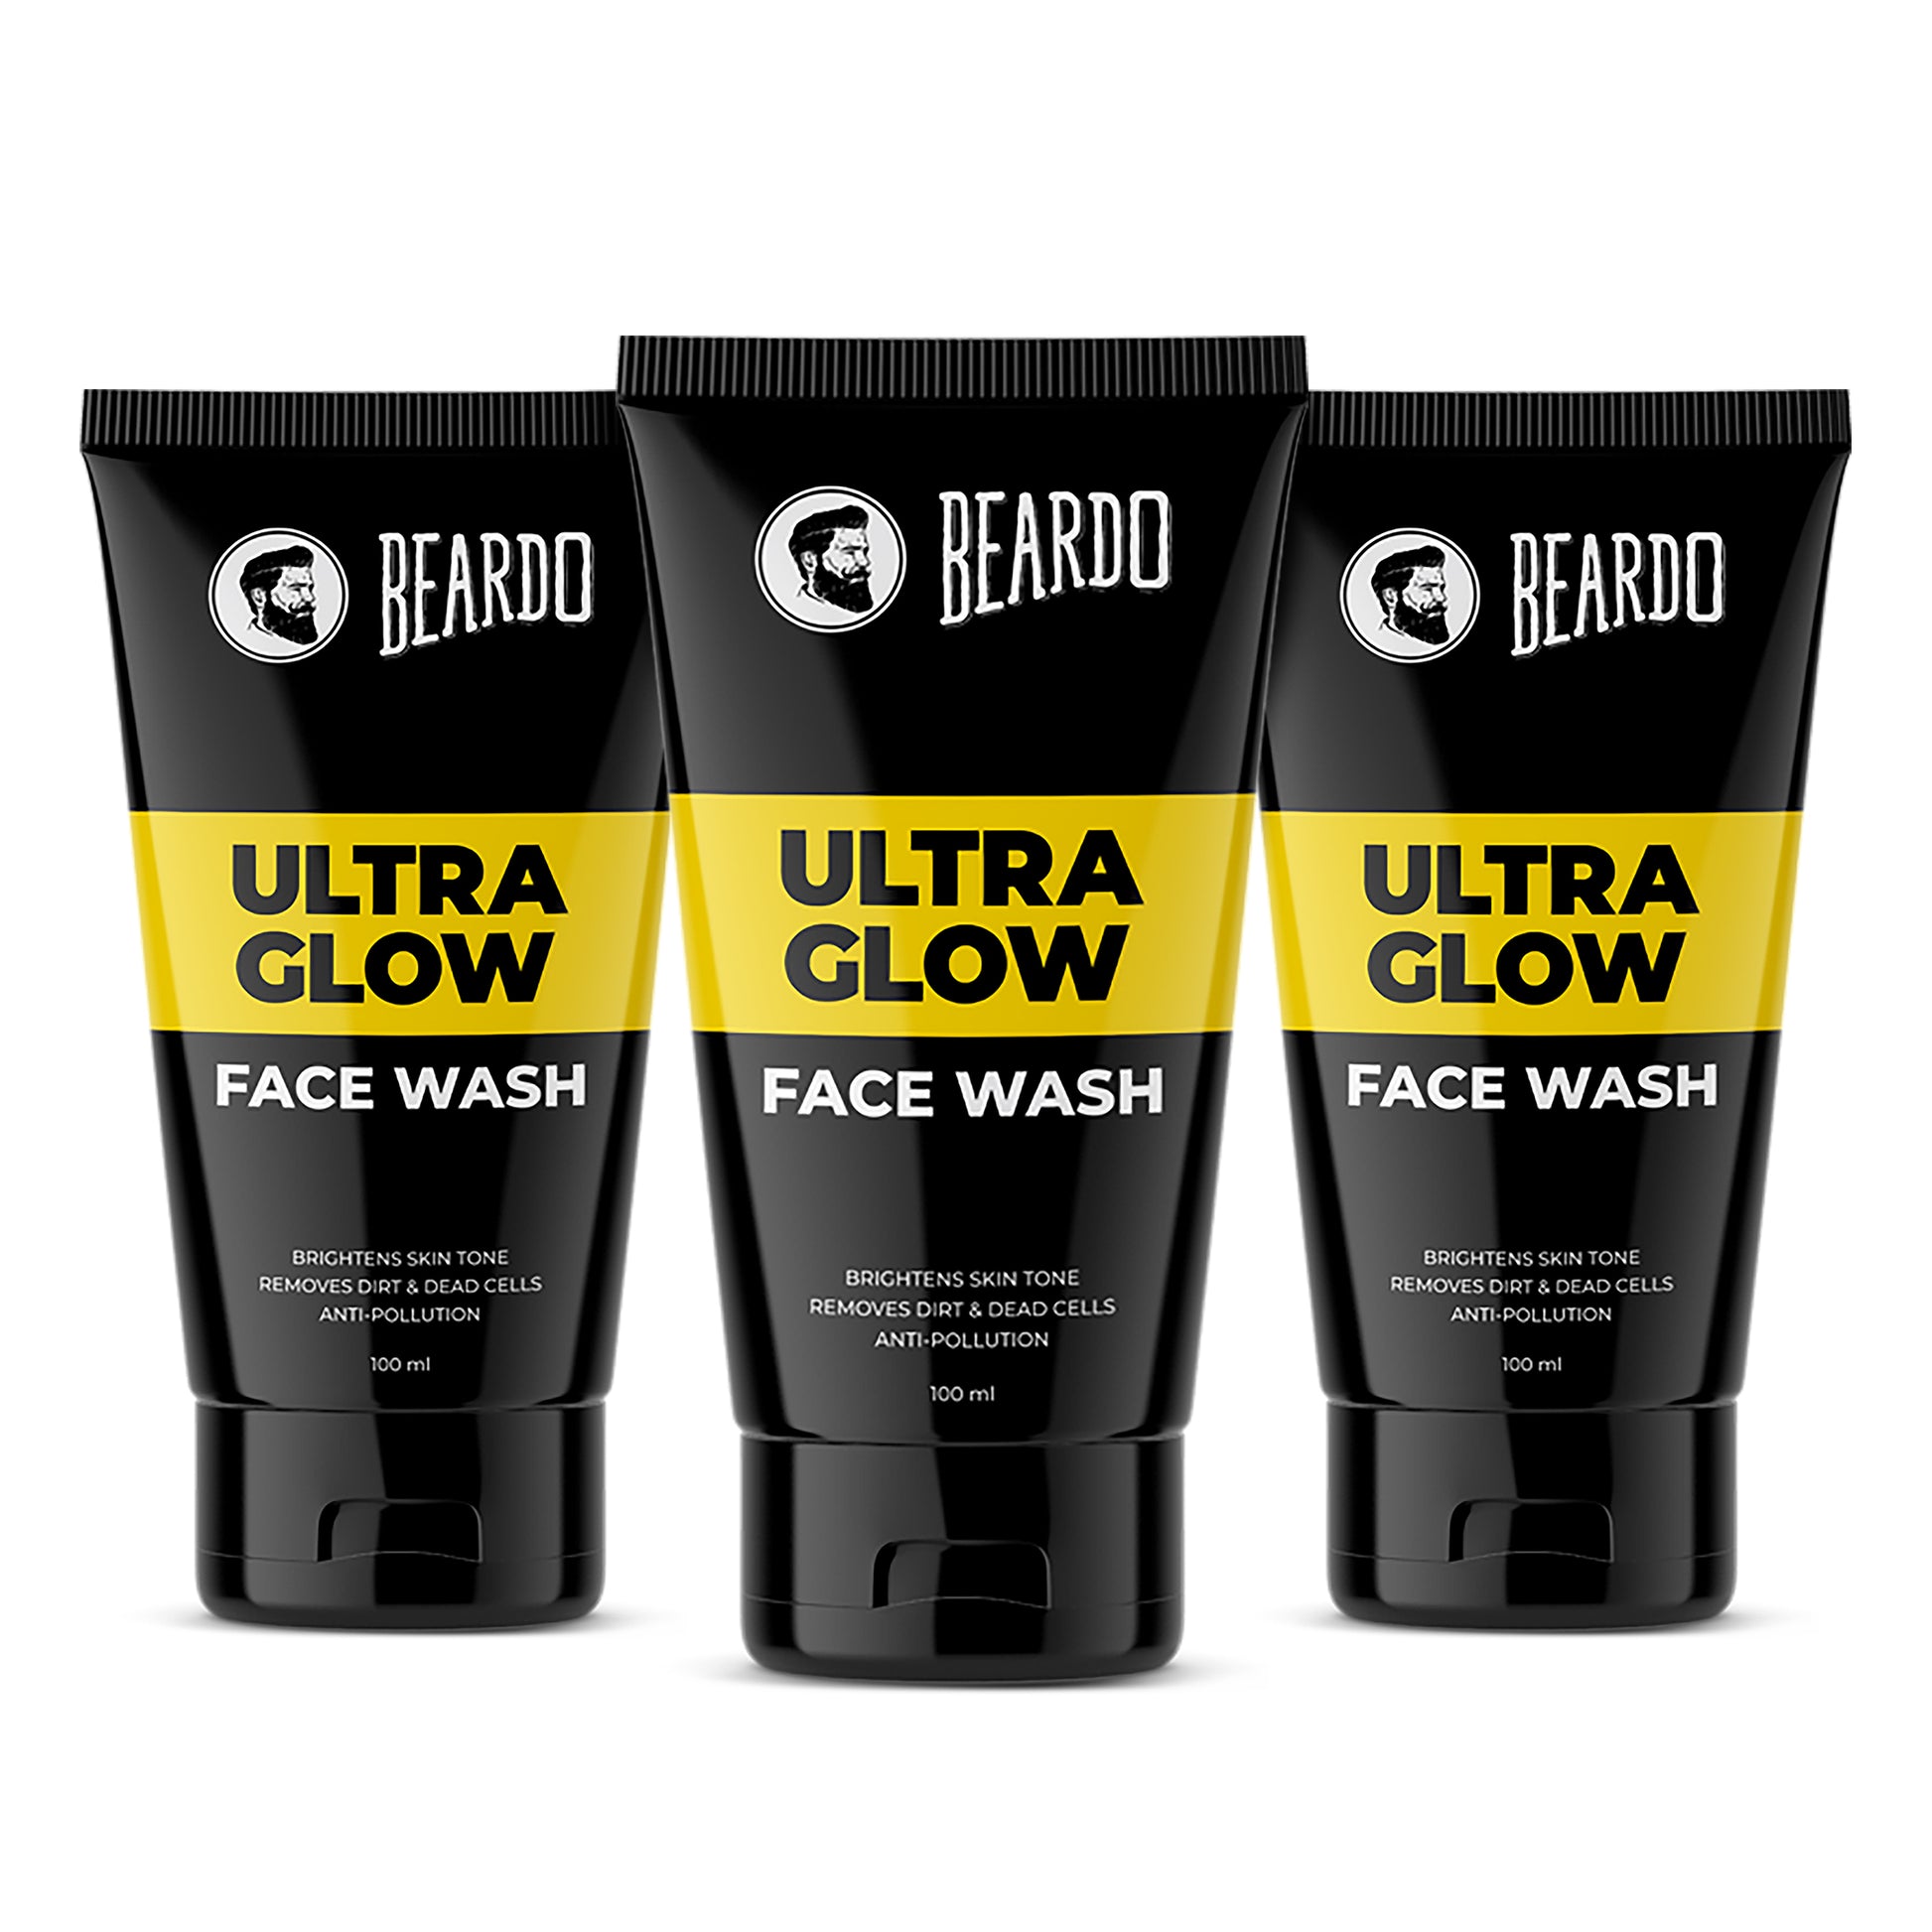 Beardo ultra glow facewash pack of 3